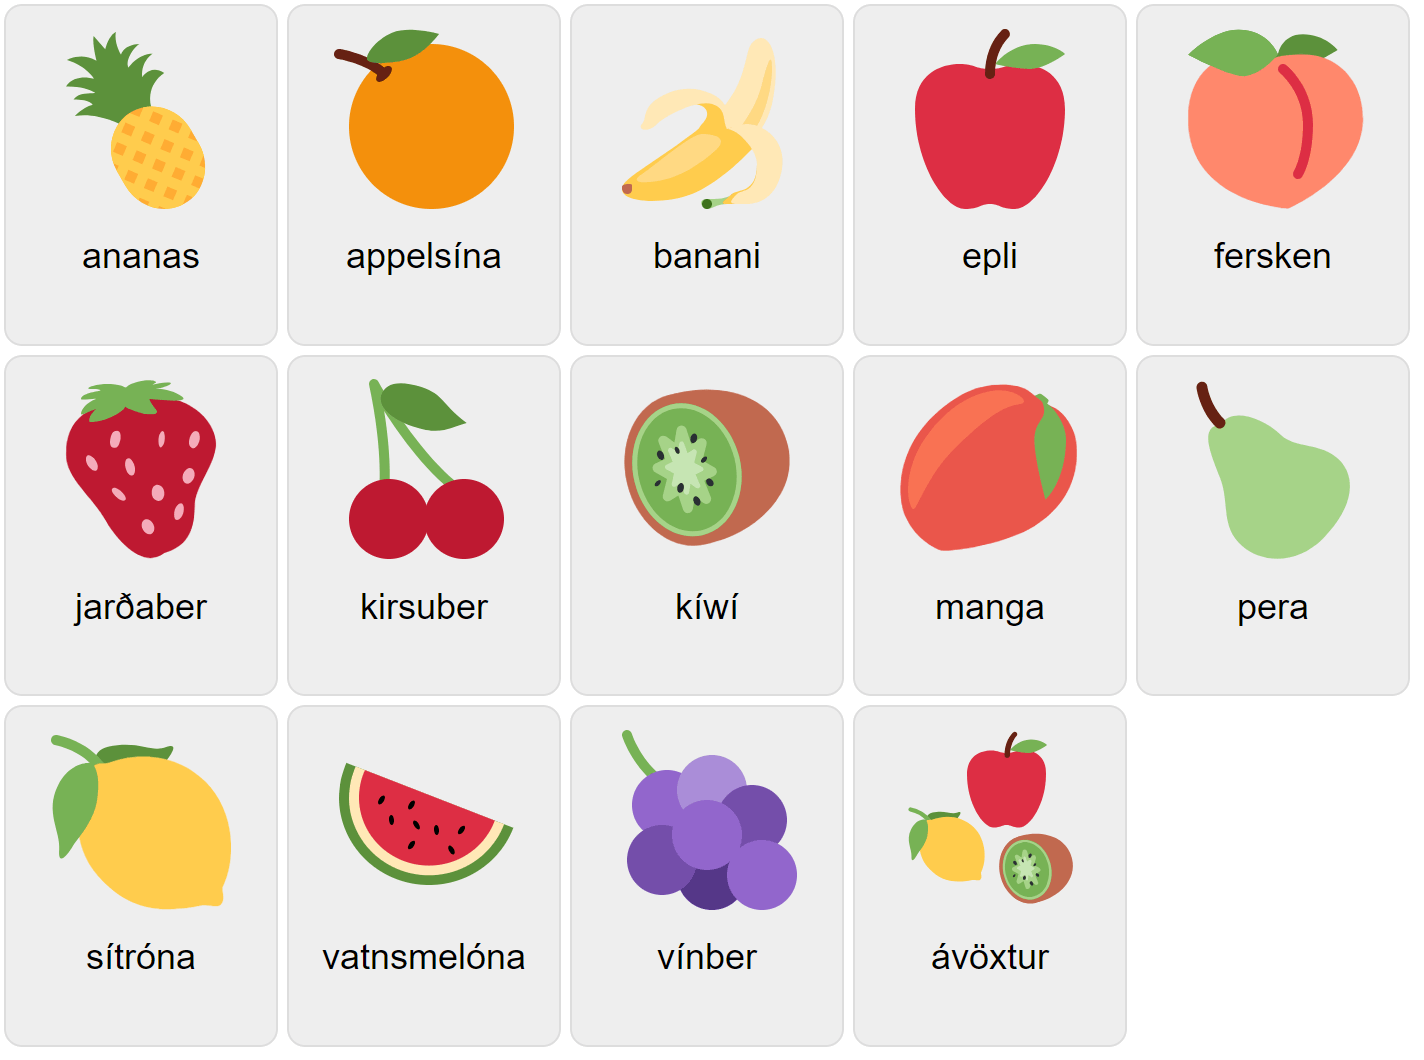 Fruits in Icelandic